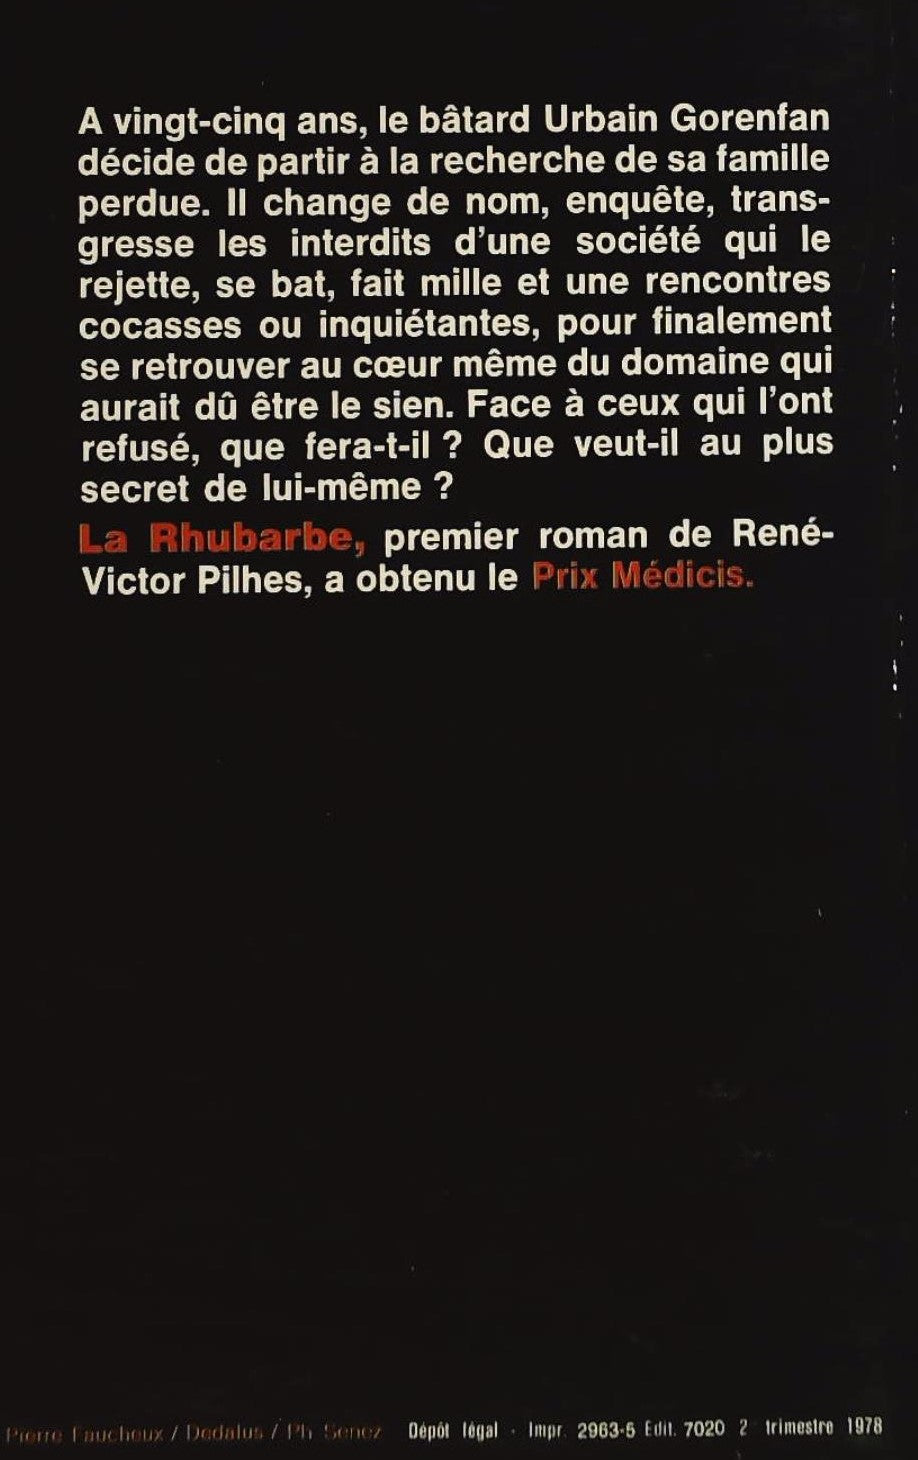 La rhubarbe (René-Victor Pilhes)